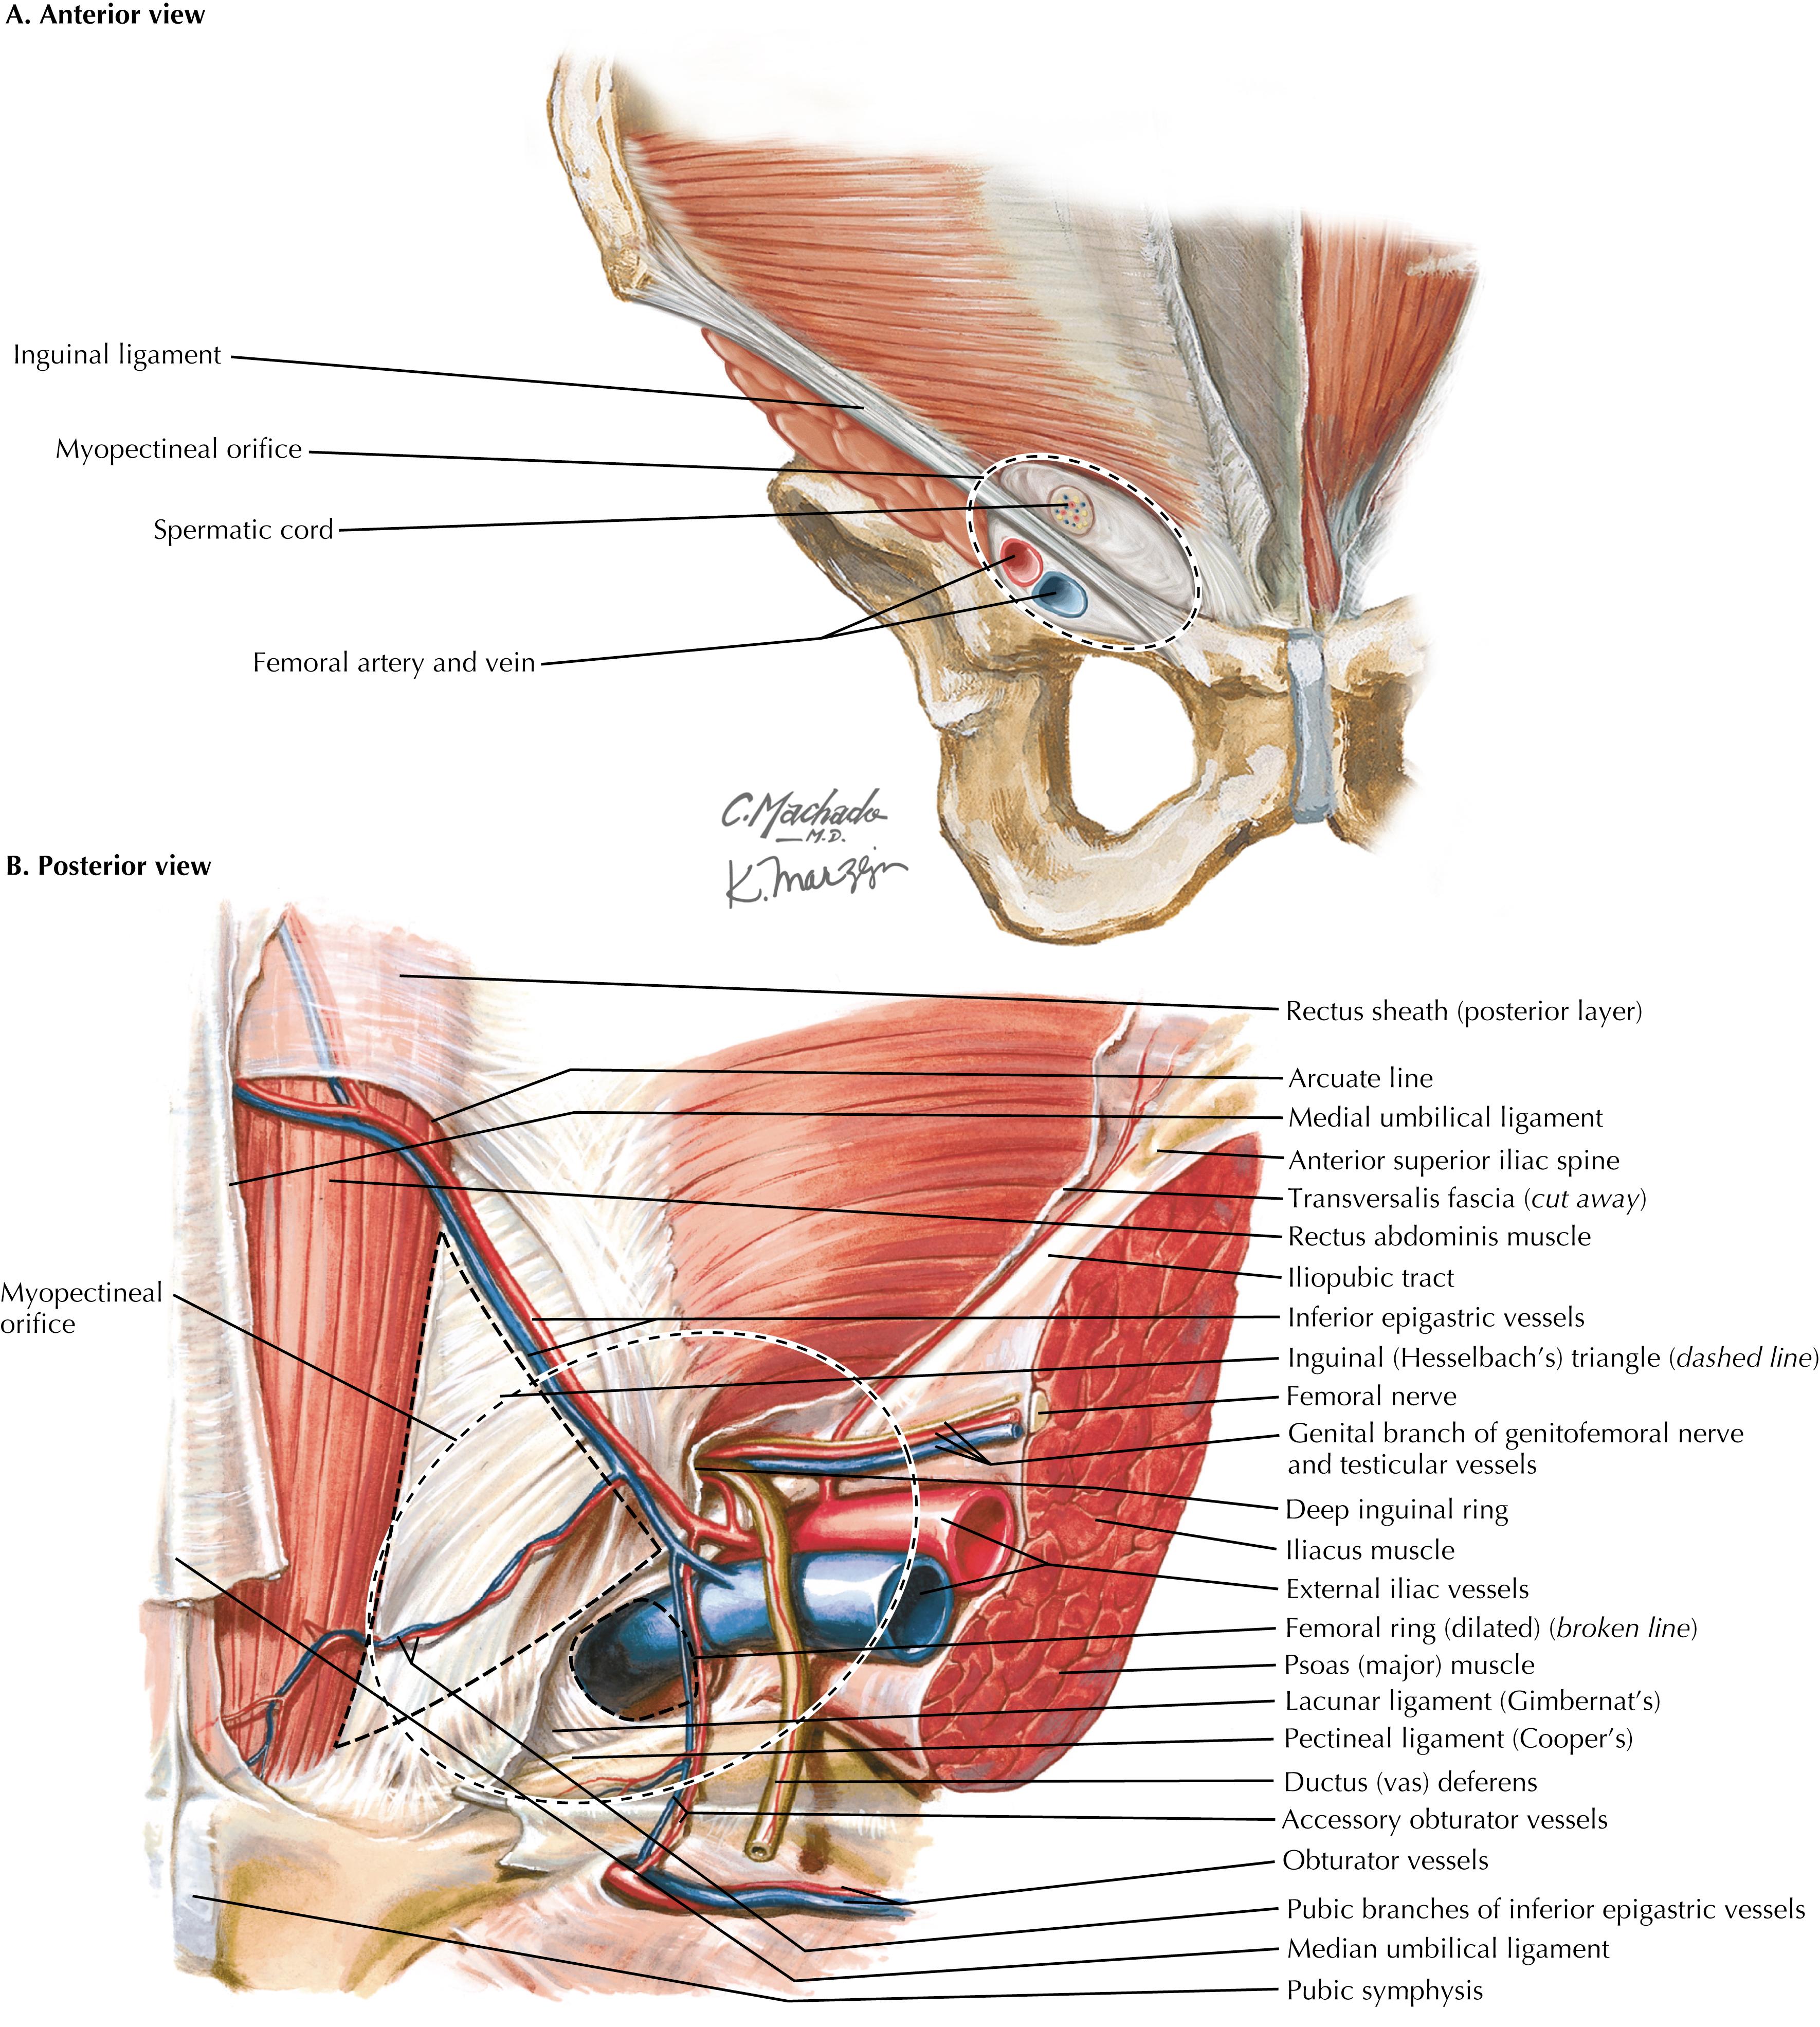 FIGURE 37.1, Anterior and posterior views of the myopectineal orifice.